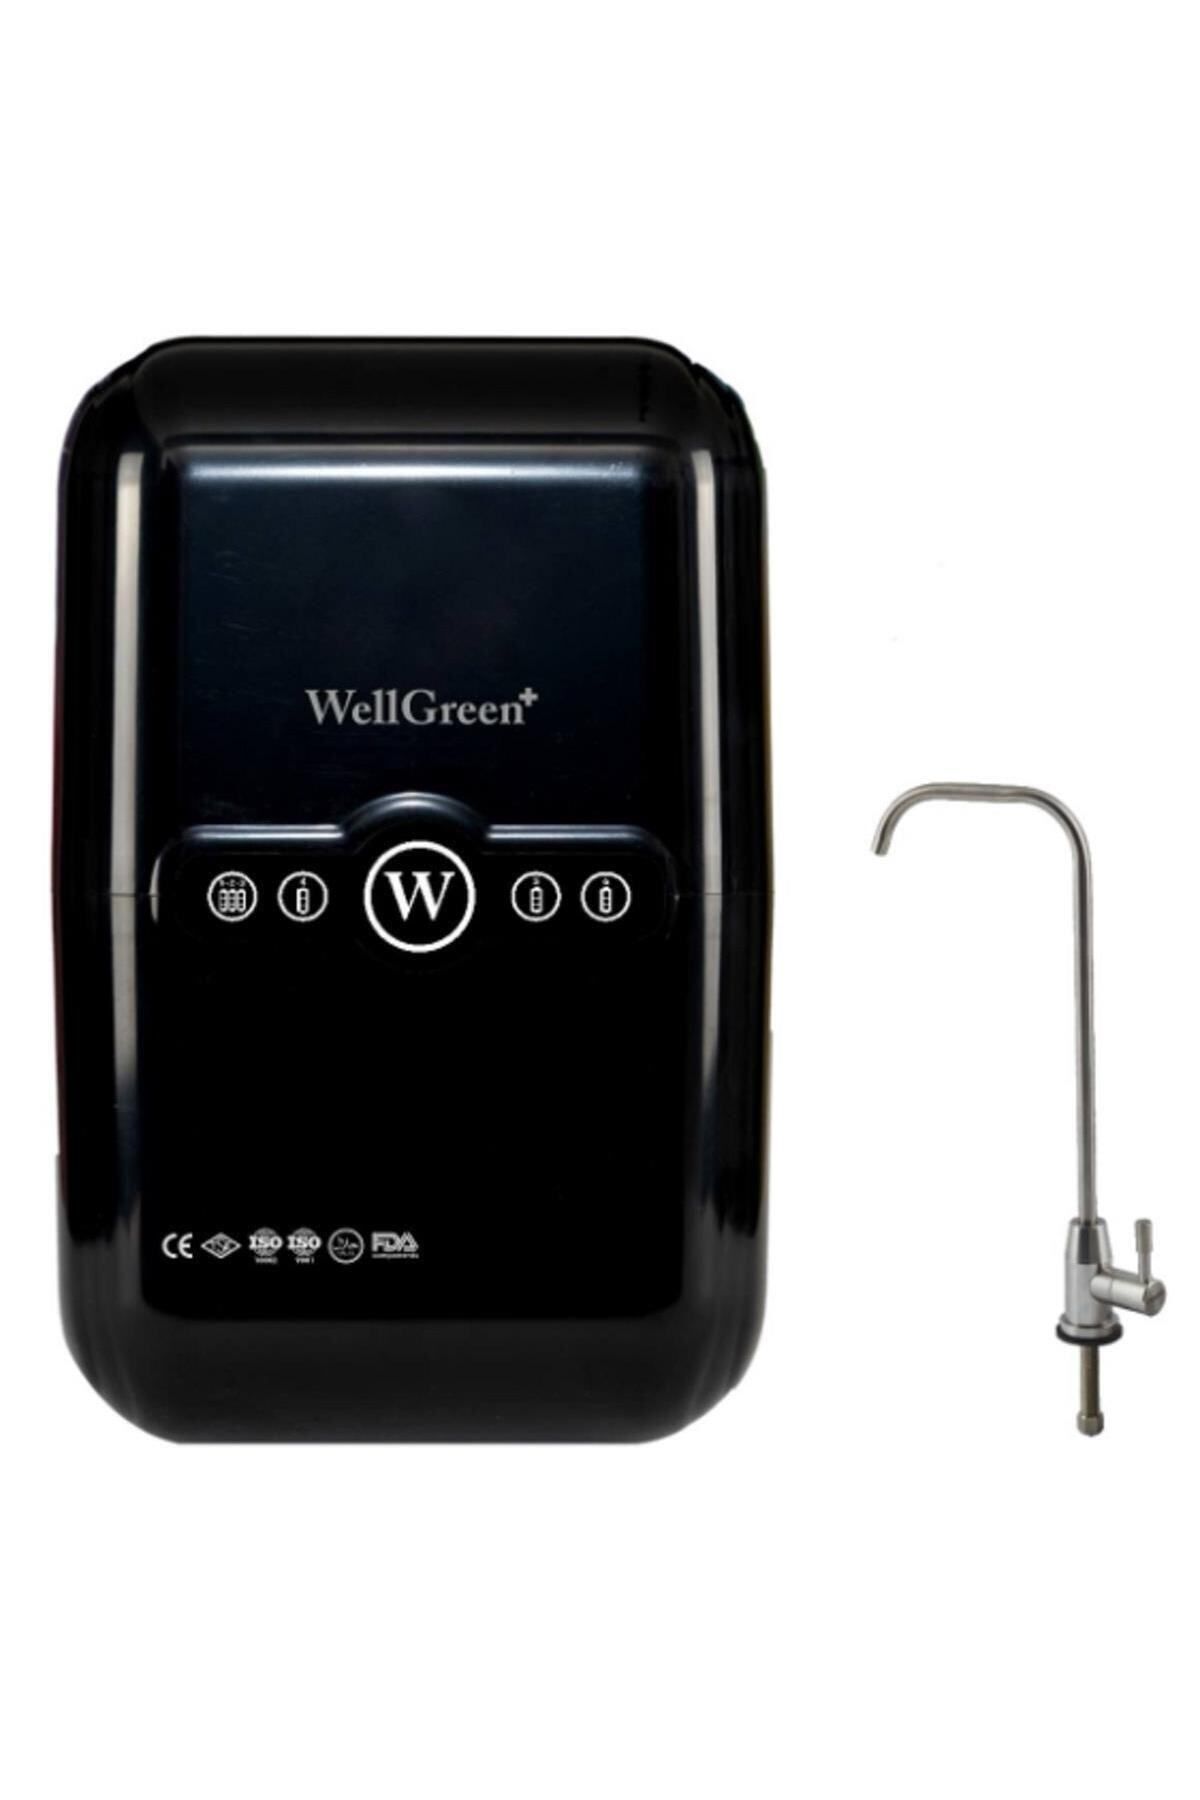 WellGreen + 13 Su Arıtma Sistemi